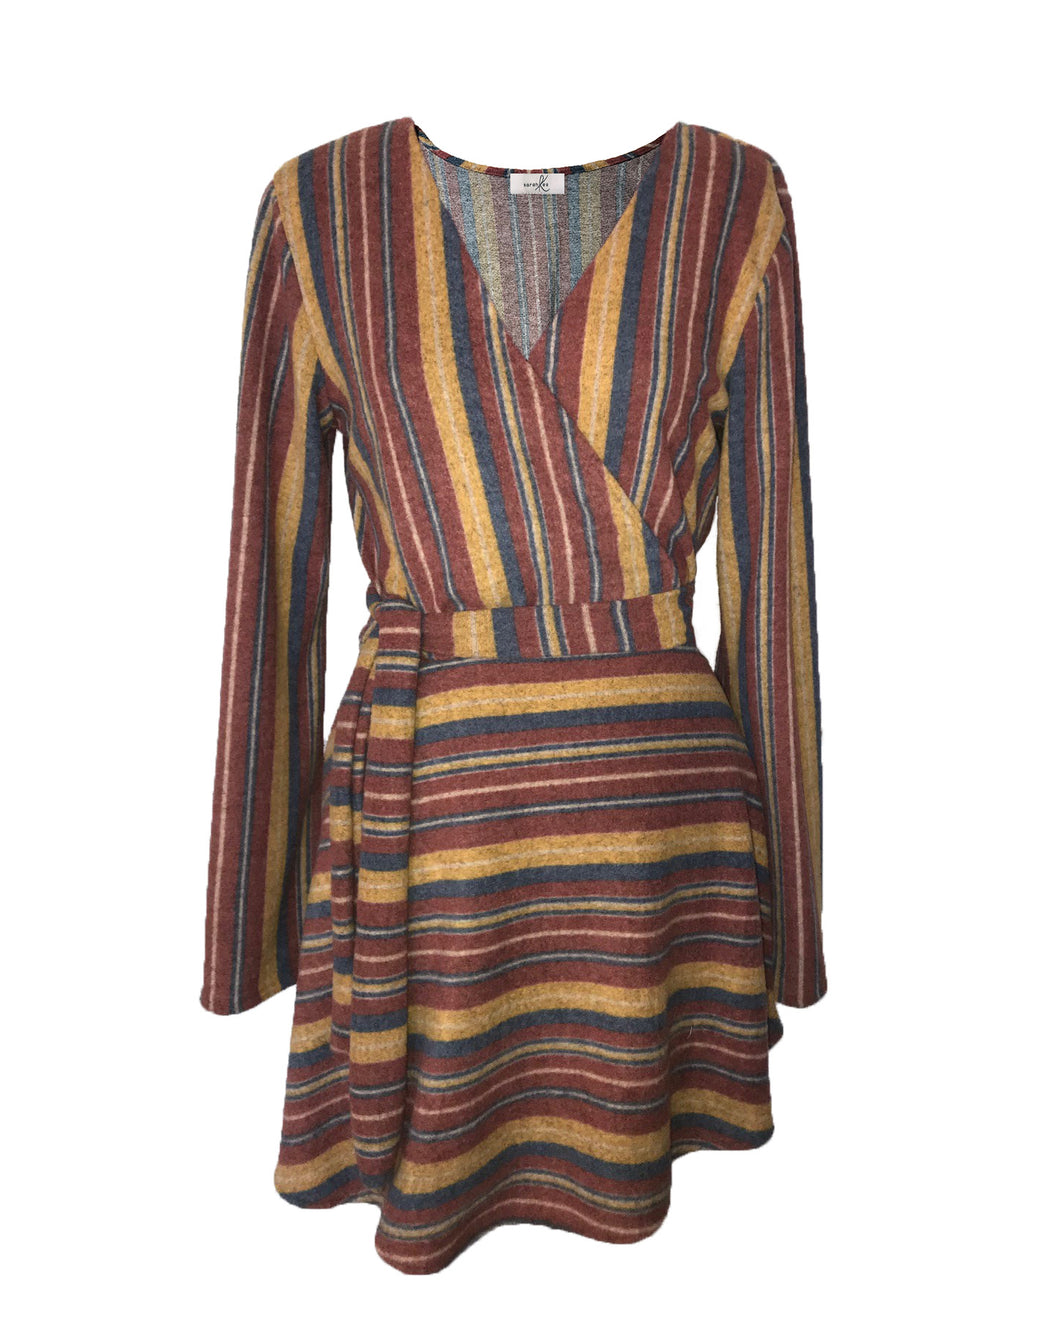 Multi-color striped sweater wrap dress